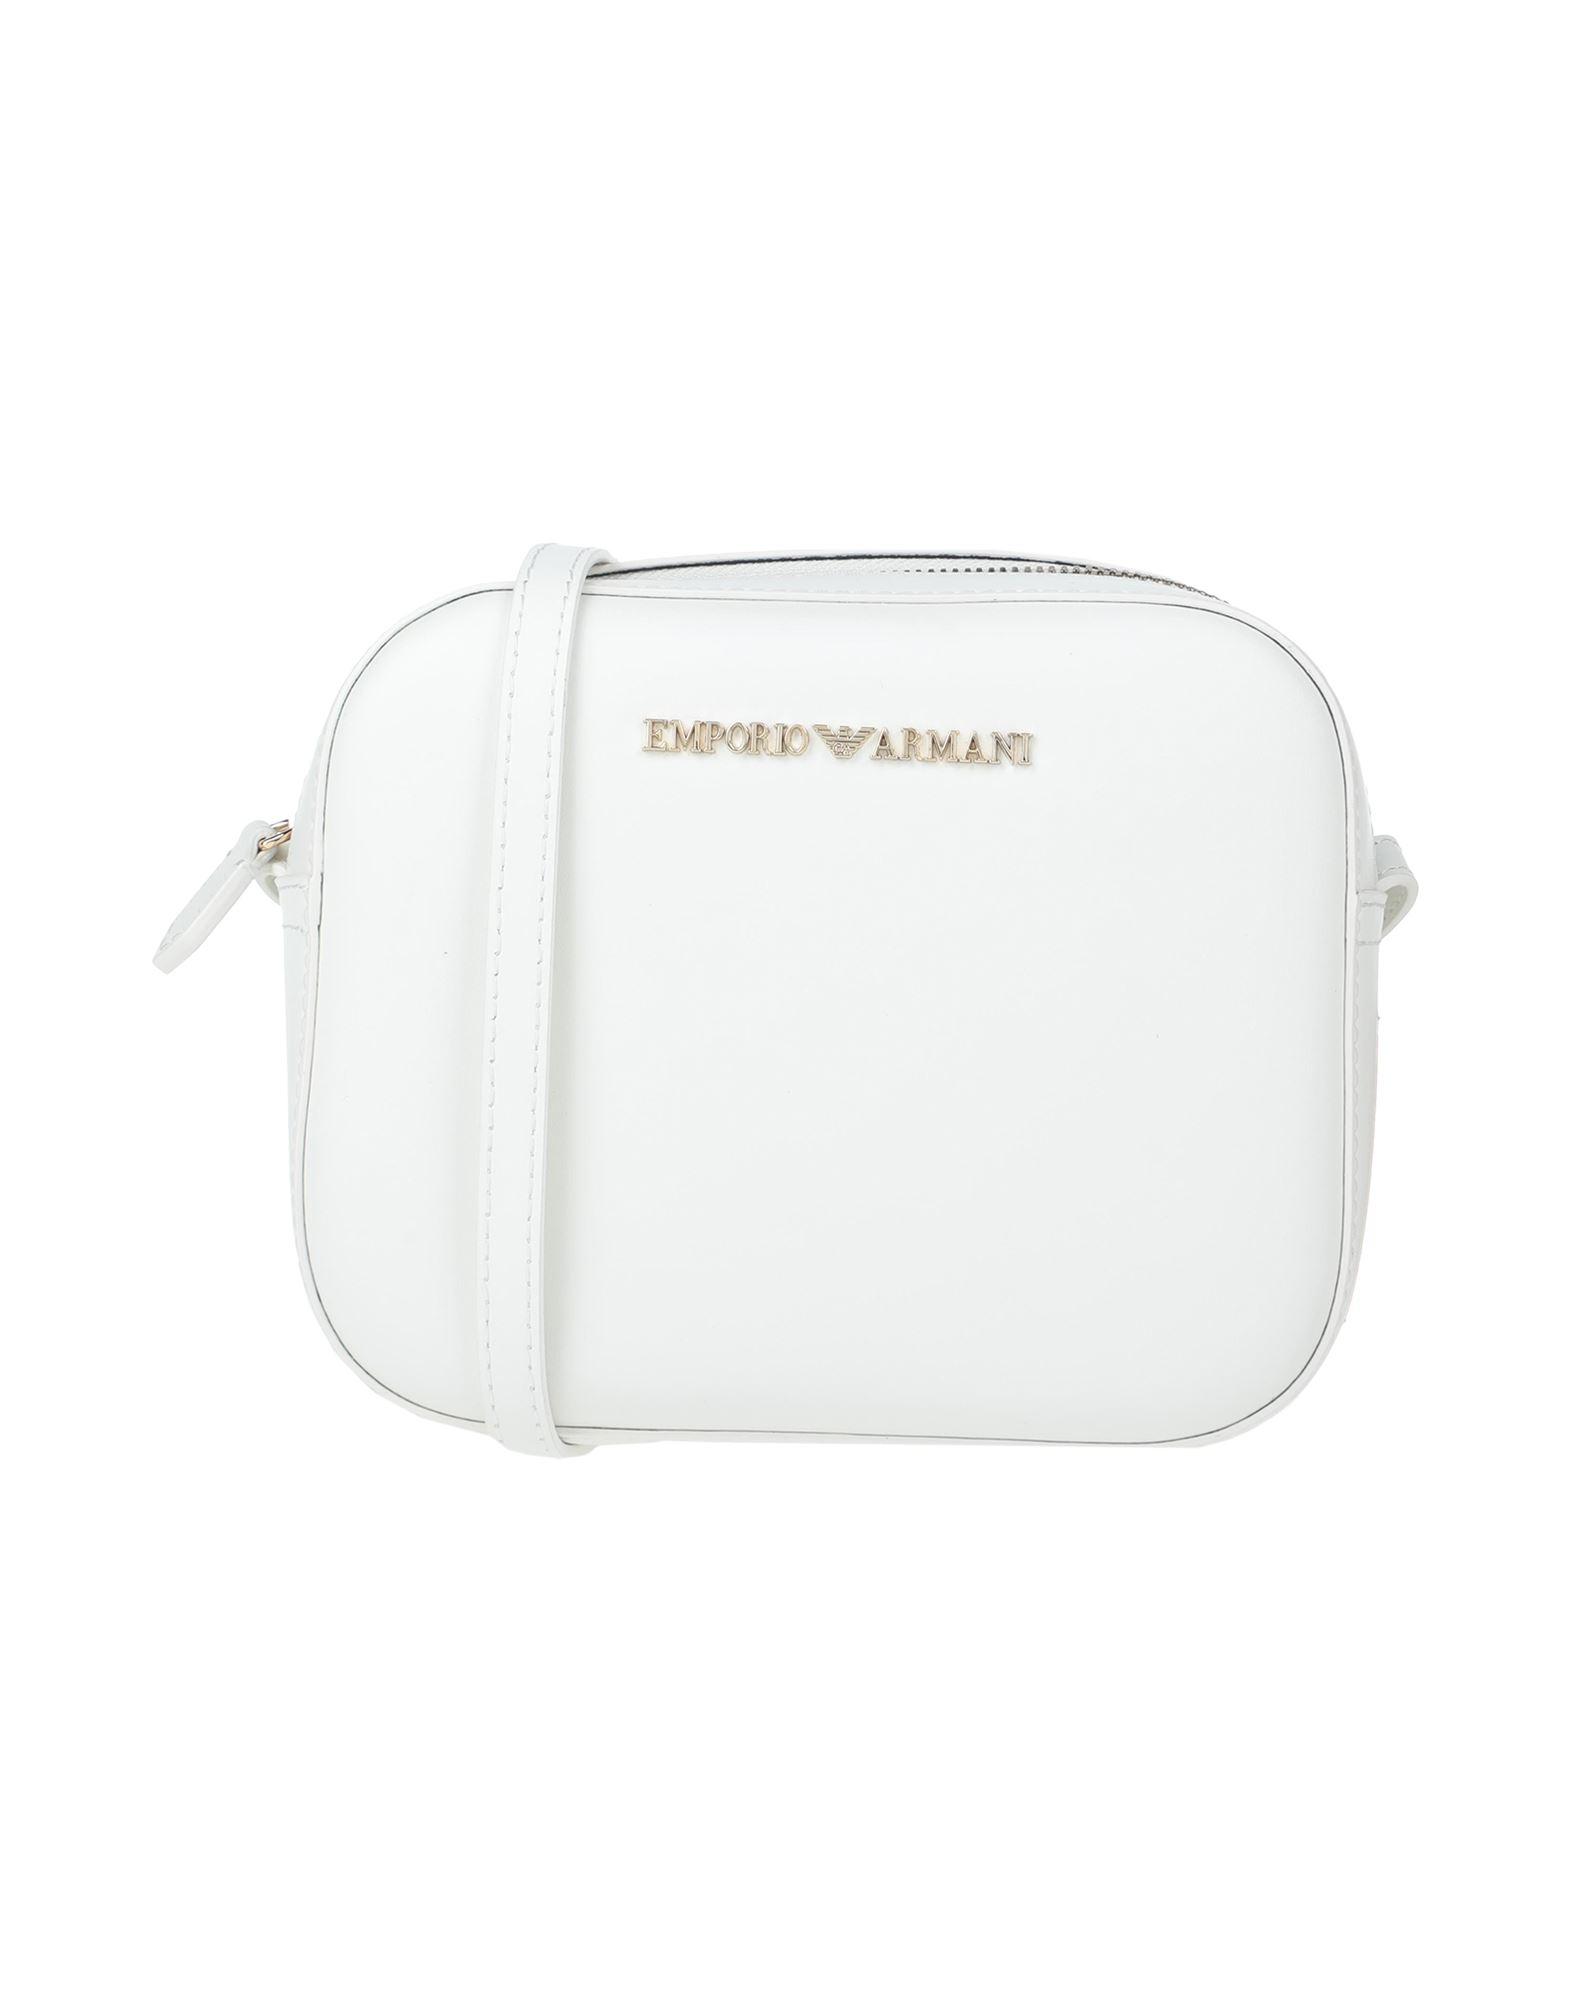 Emporio Armani Leather Cross-body Bag in White | Lyst